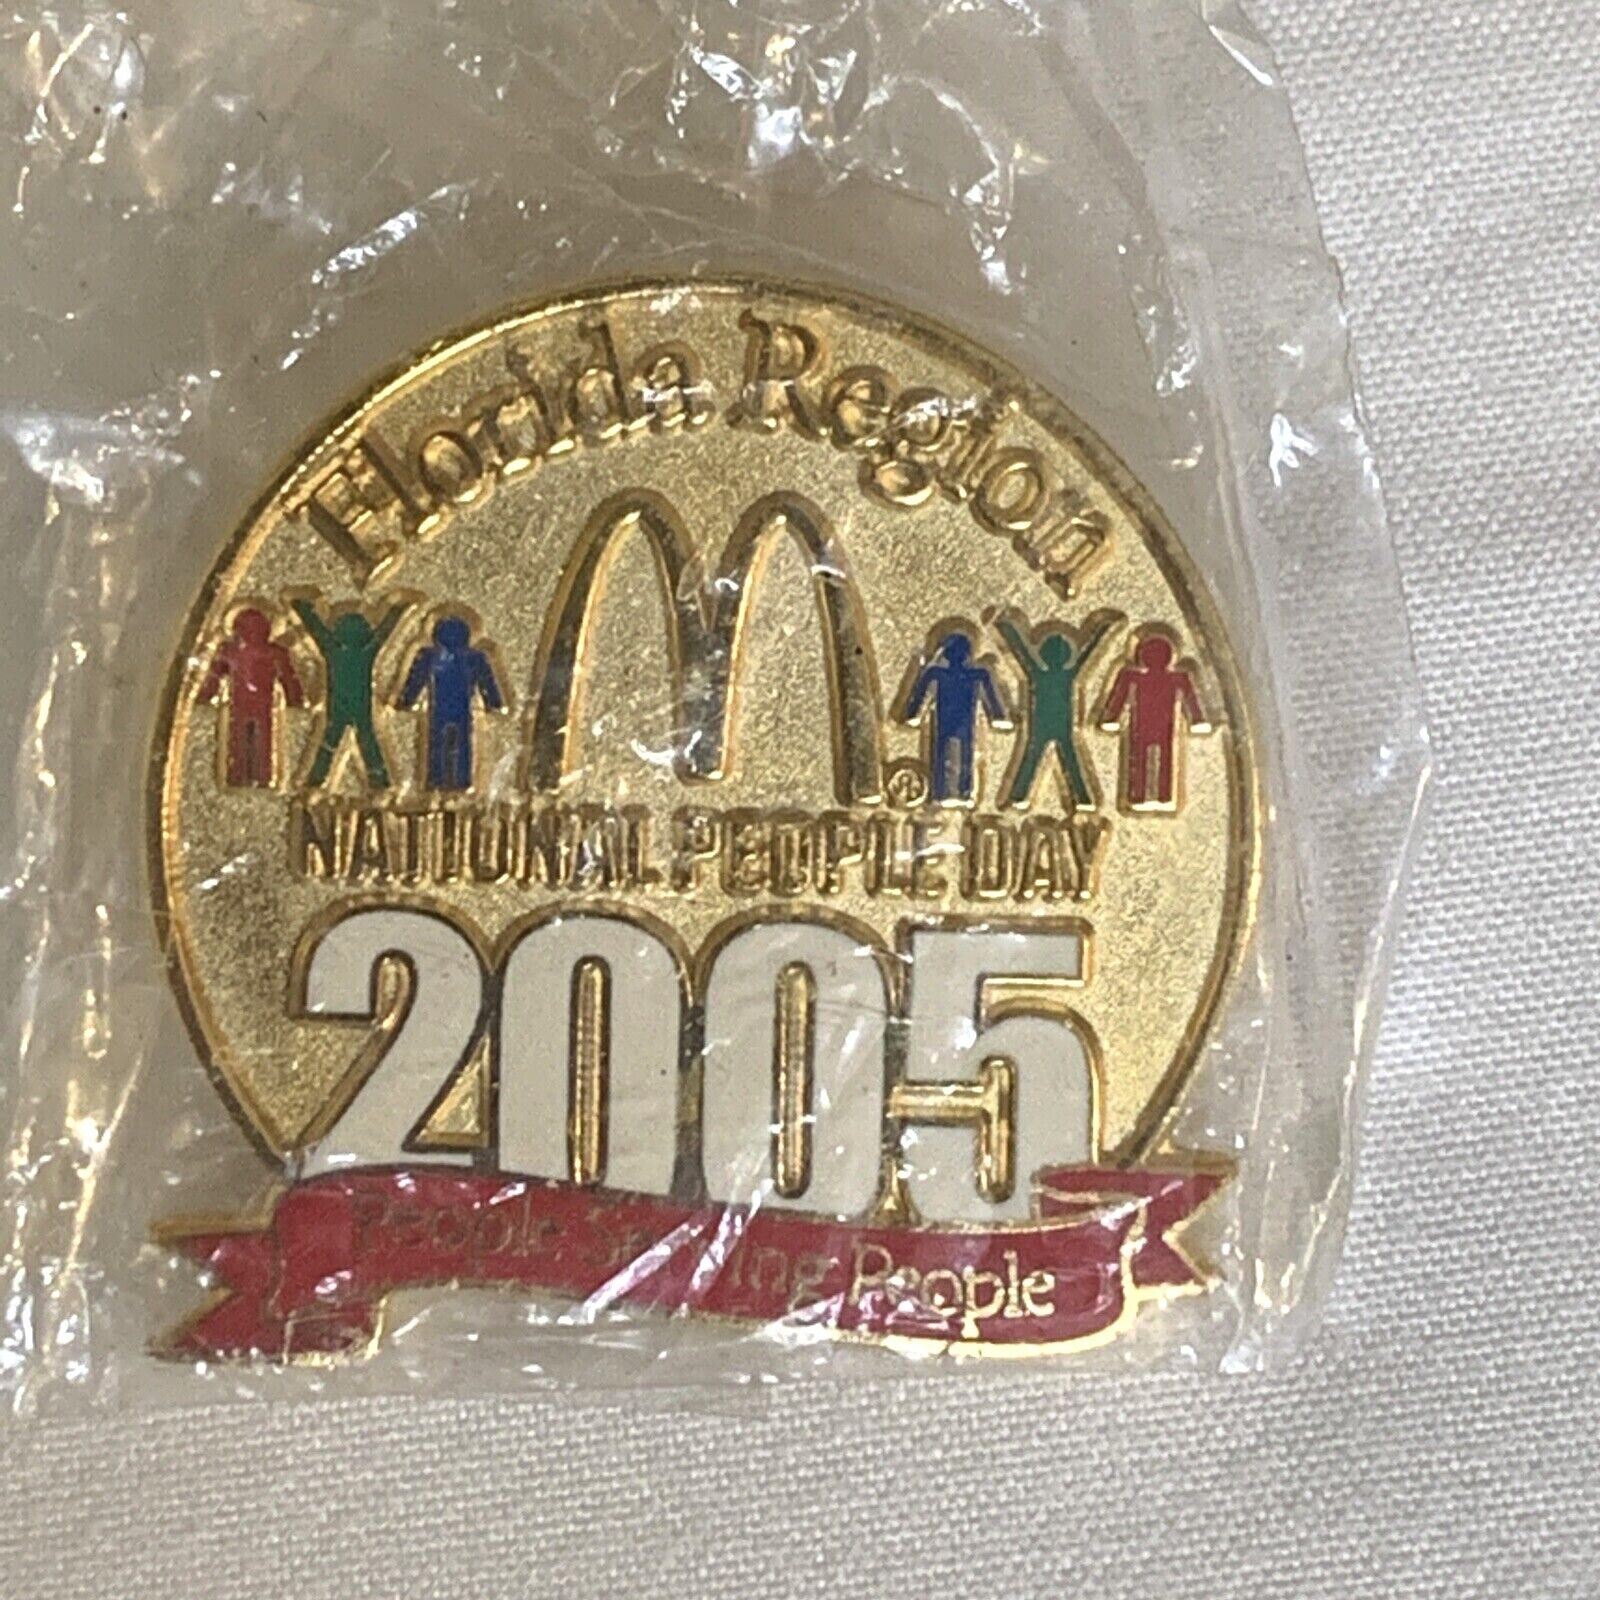 McDonalds Pin 2005 Fast Food Restaurant National People Day Florida Region Badge